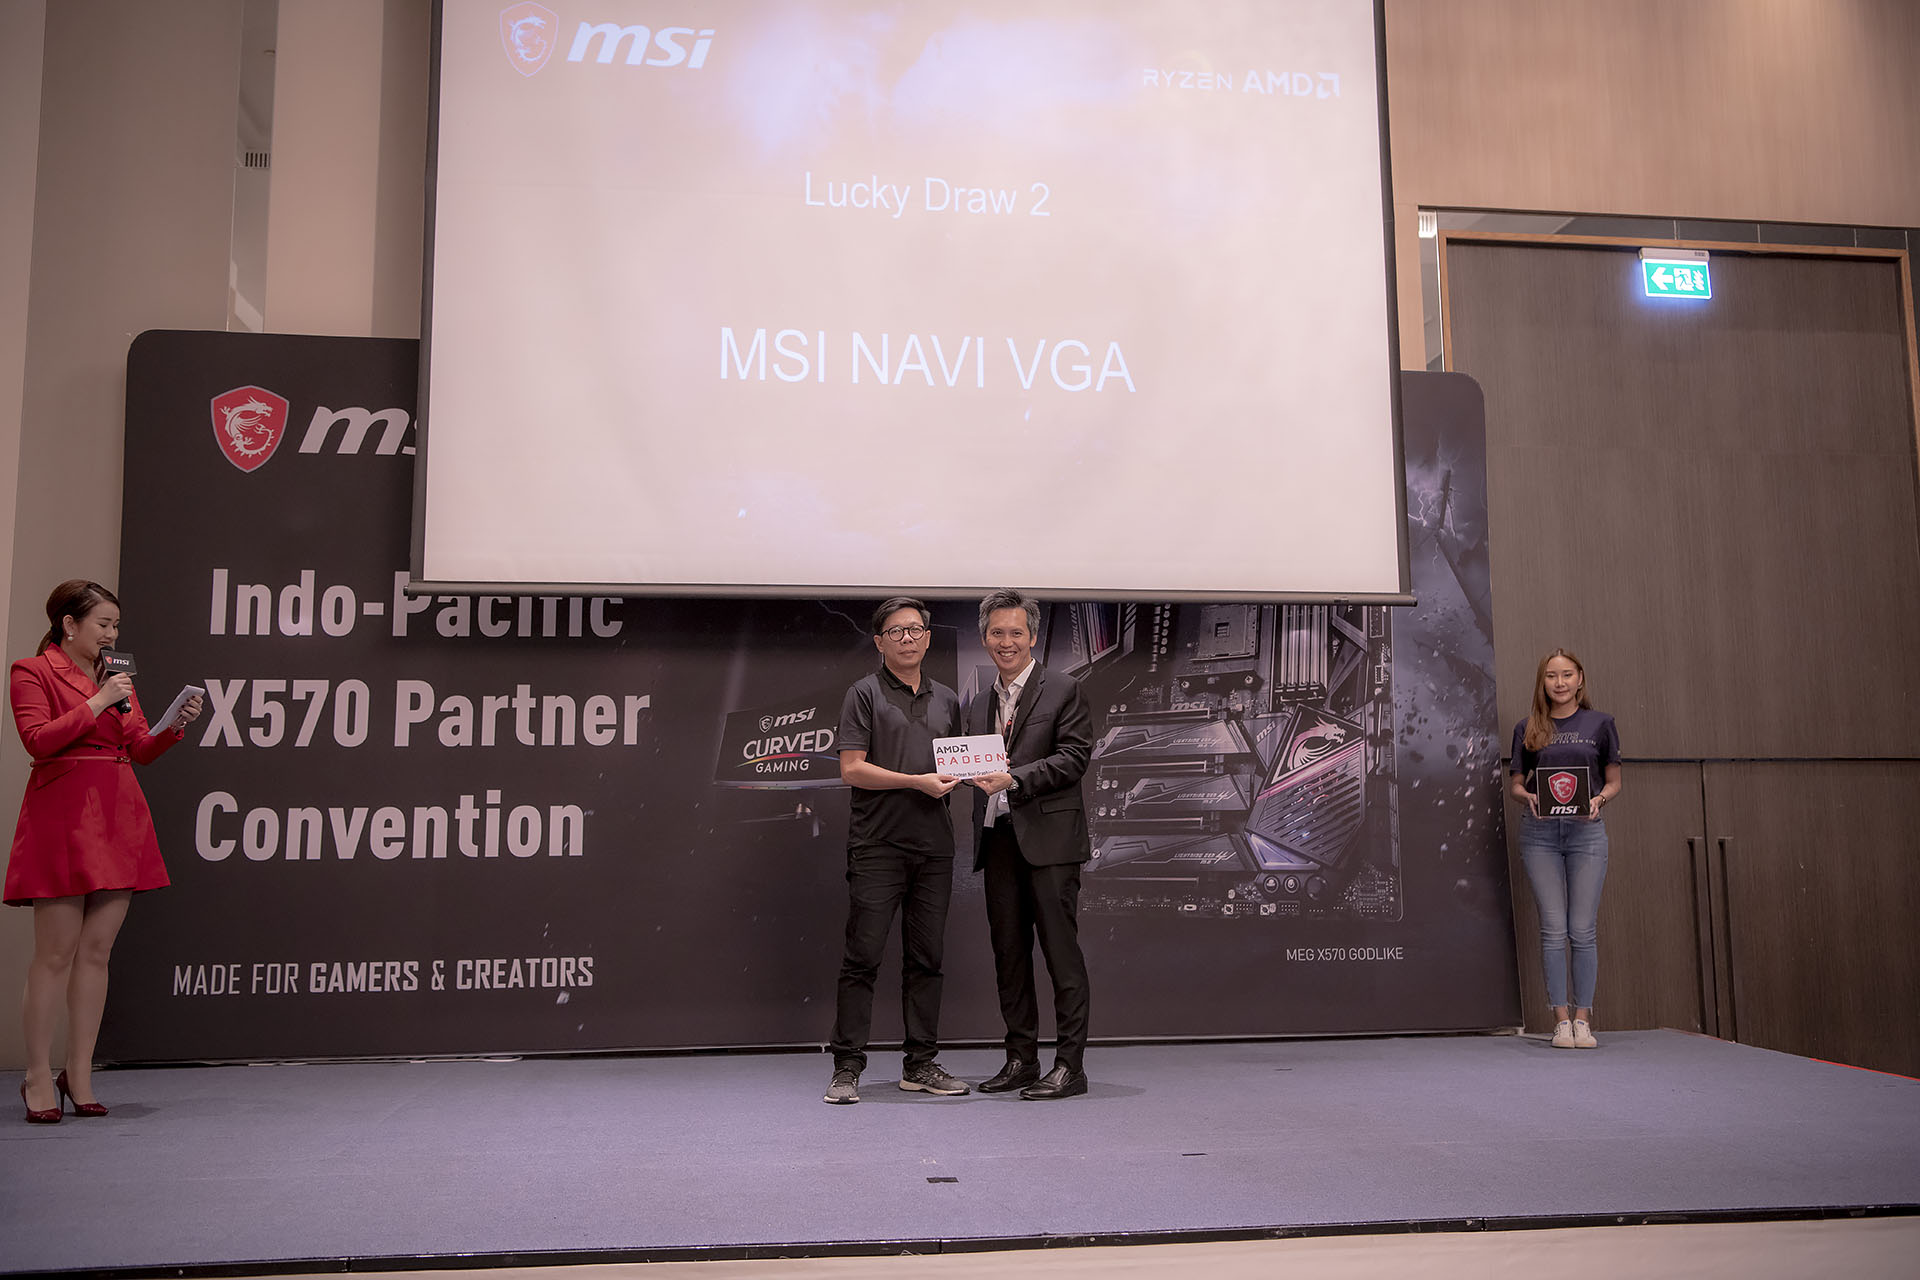 dsc 4967 บรรยากาศงาน MSI Indo Pacific X570 Partner Convention พบการเปิดตัวเมนบอร์ด X570 รุ่นใหม่ล่าสุดจากทาง MSI ต้อนรับการมาของซีพียู AMD RYZEN 3000ซีรี่ย์ 